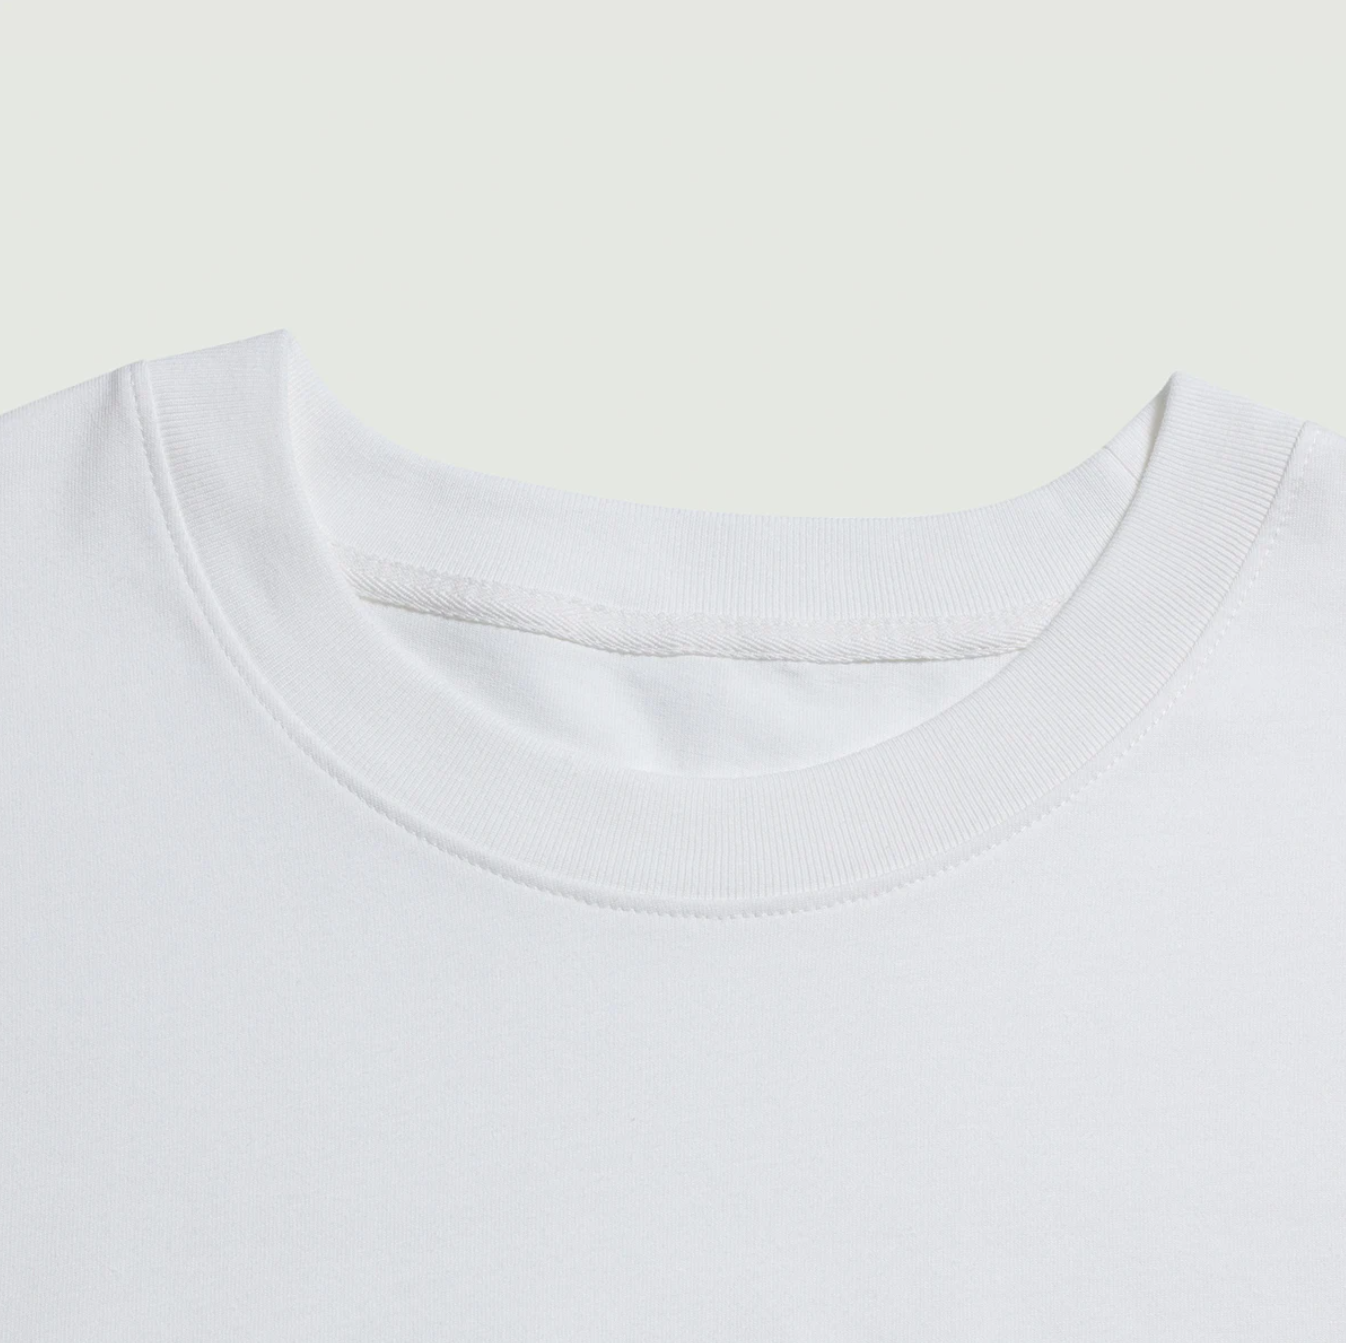 STAY TOGETHER (BACK PRINT) - Unisex Oversized T-shirt